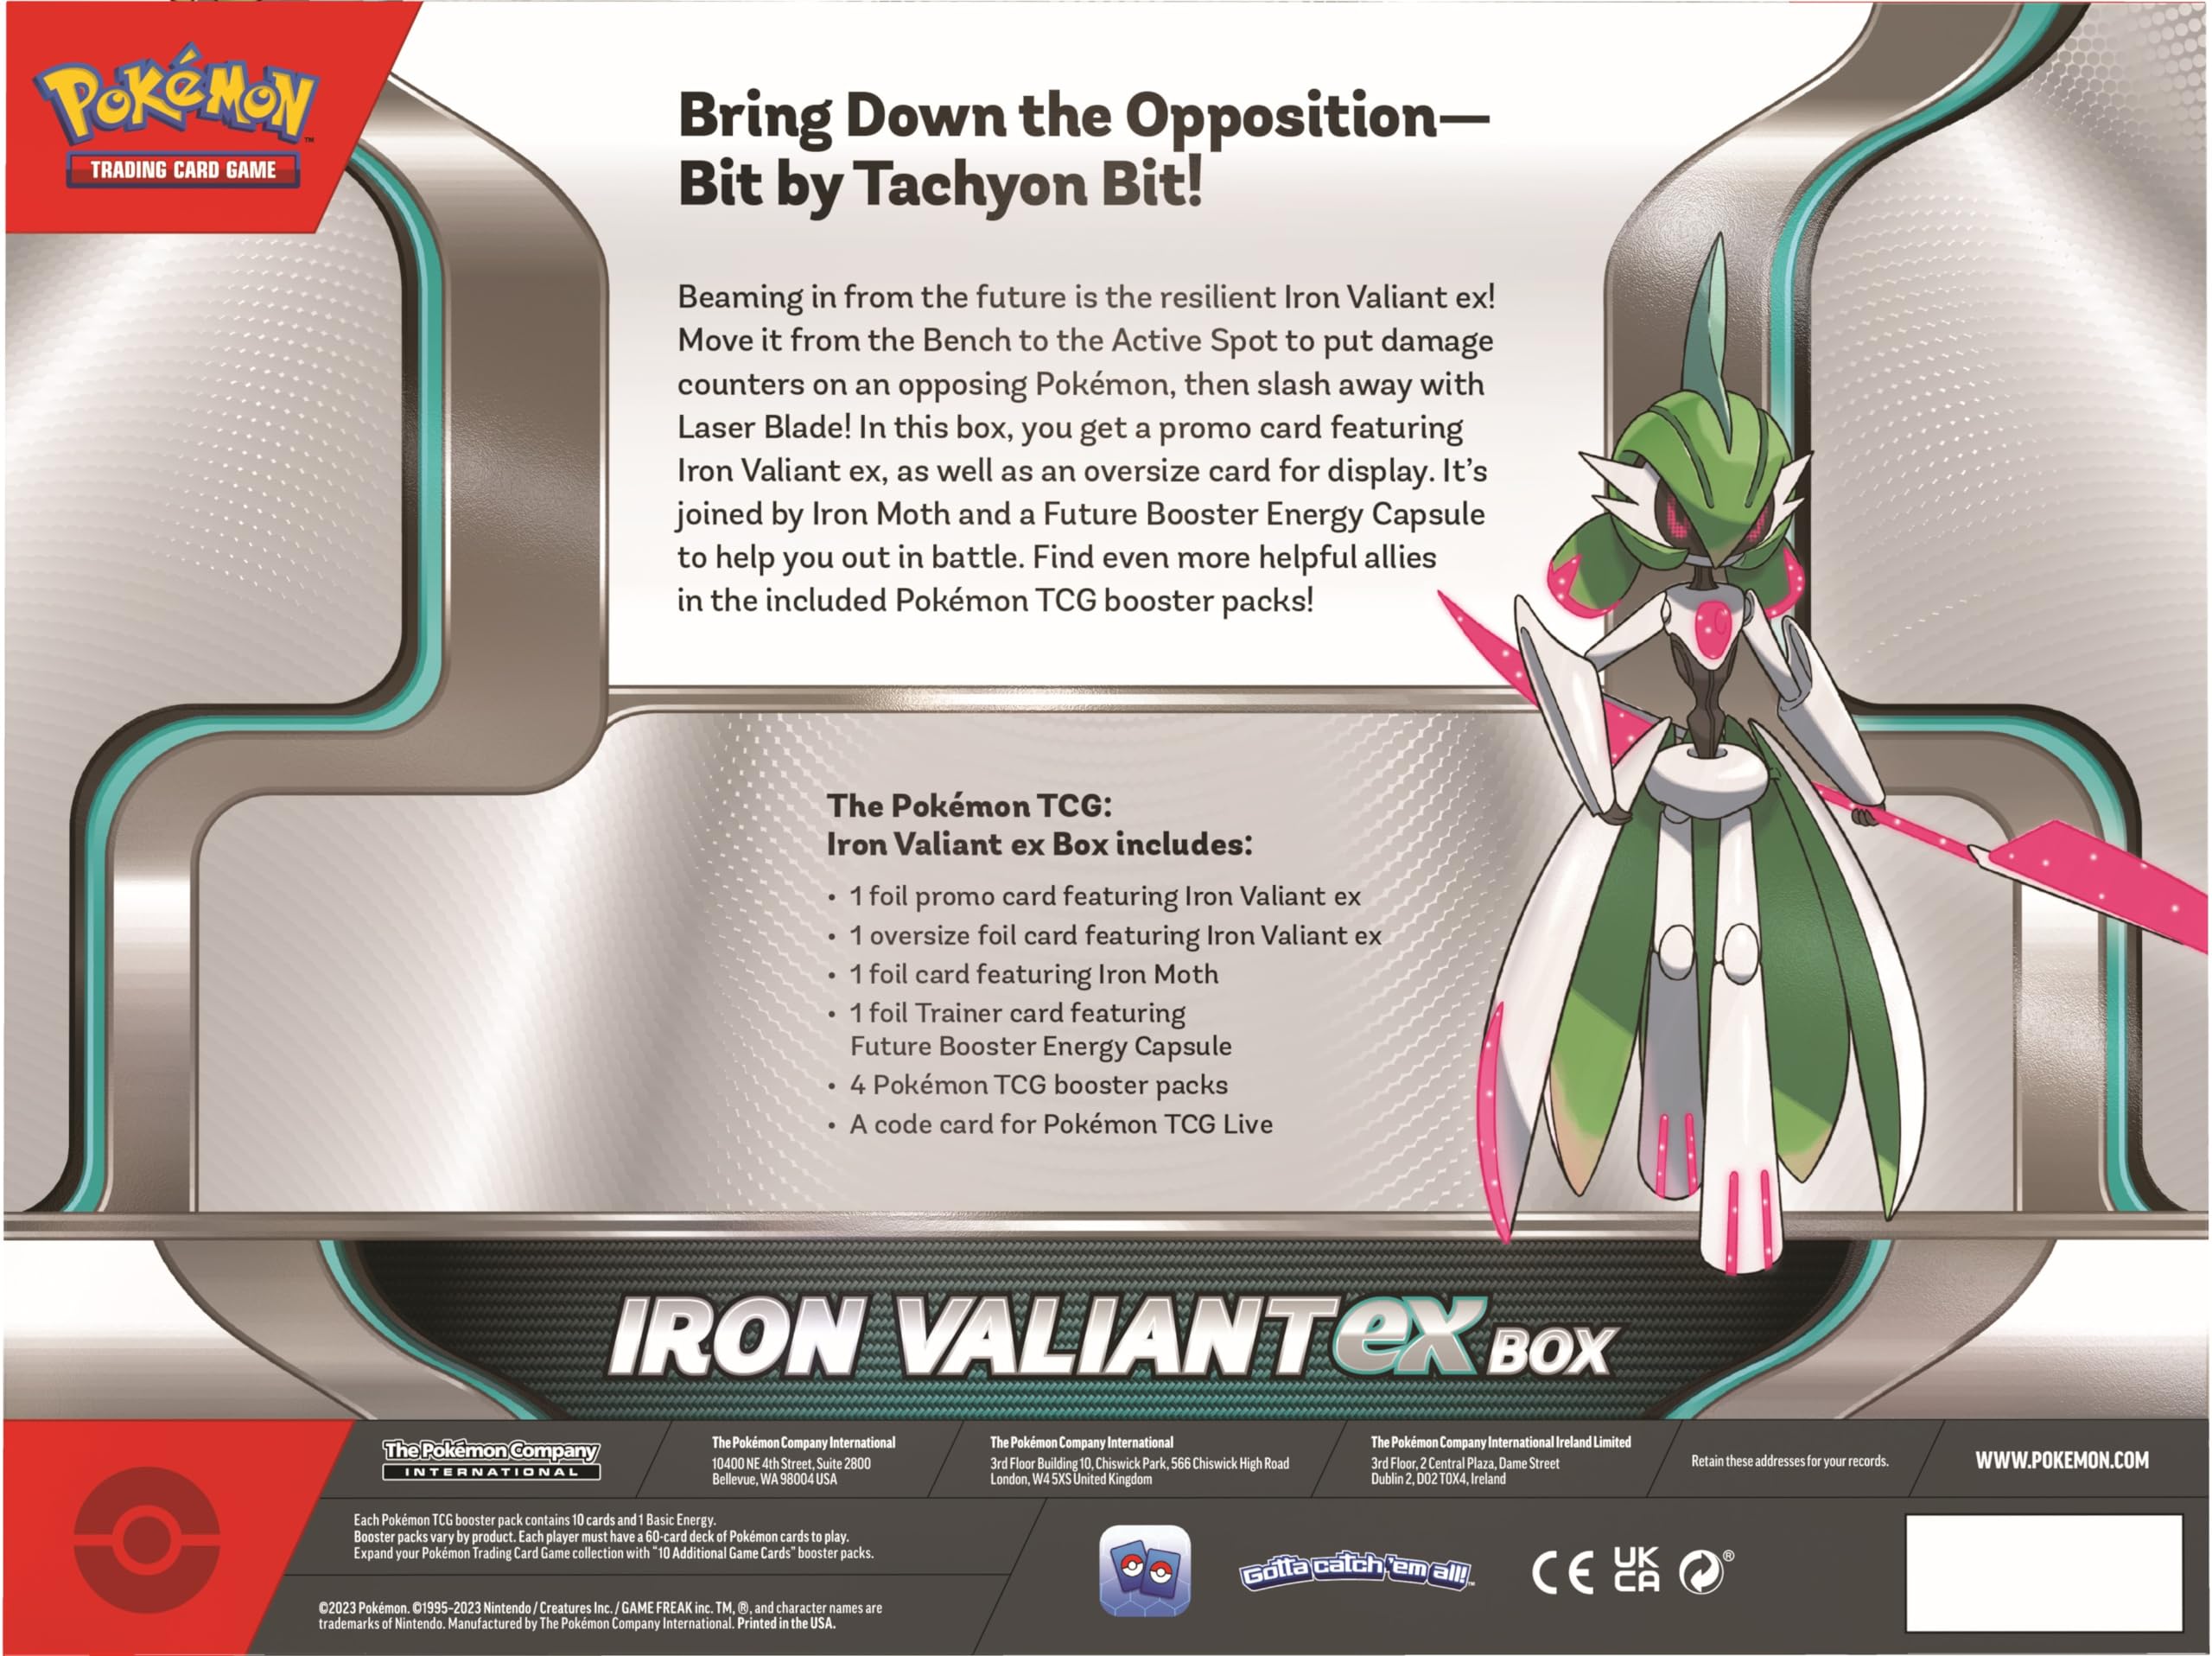 Pokémon TCG: Roaring Moon or Iron Valiant ex Box (One at Random)